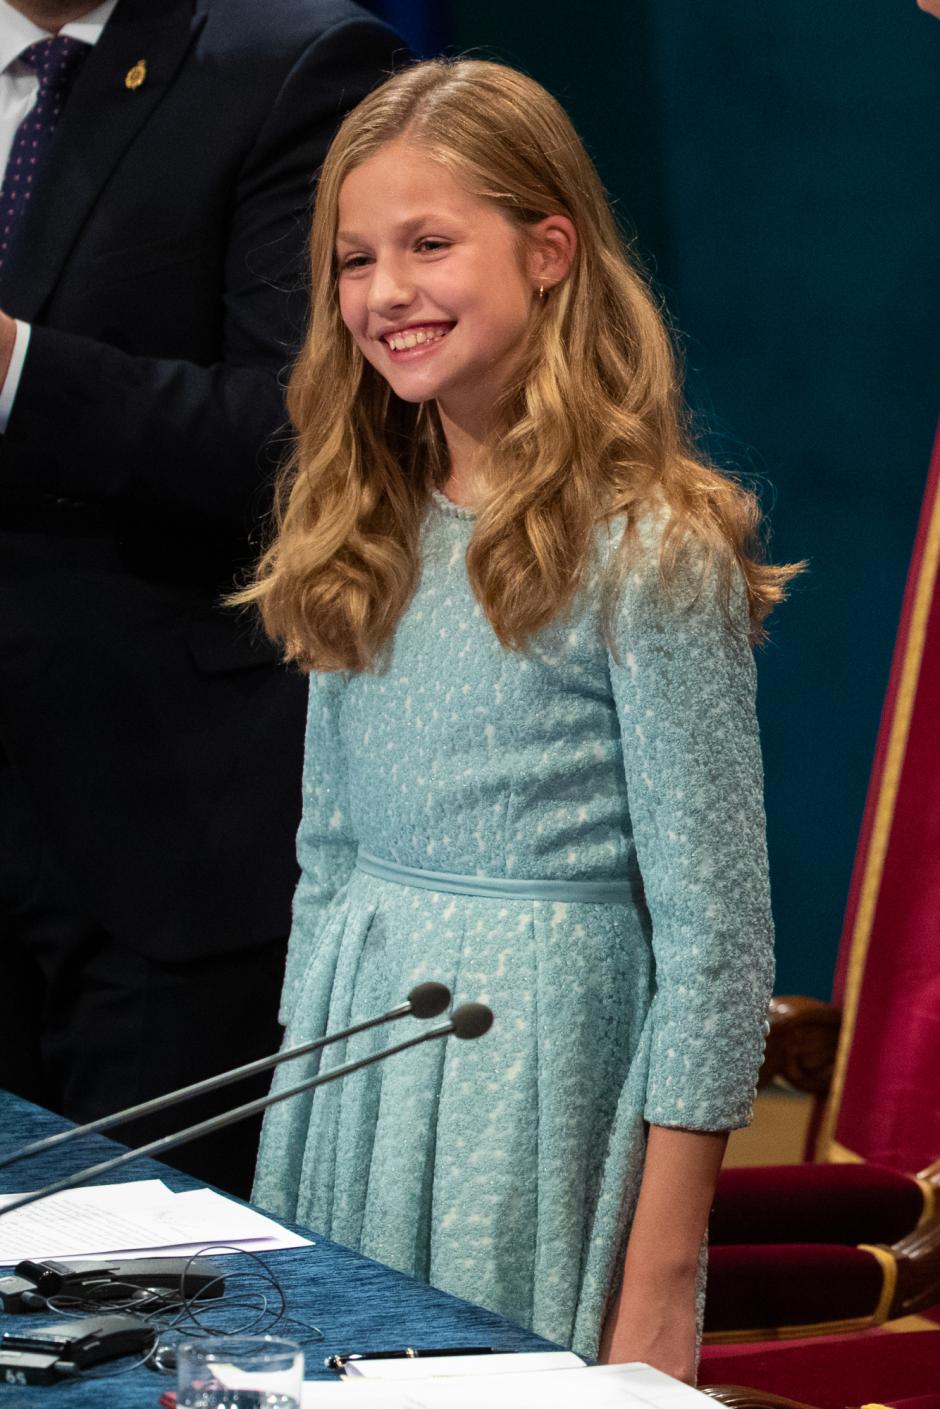 Princess of Asturias Leonor de Borbon during the delivery of the Princess of Asturias Awards 2019 in Oviedo, on Friday 18 October 2019.